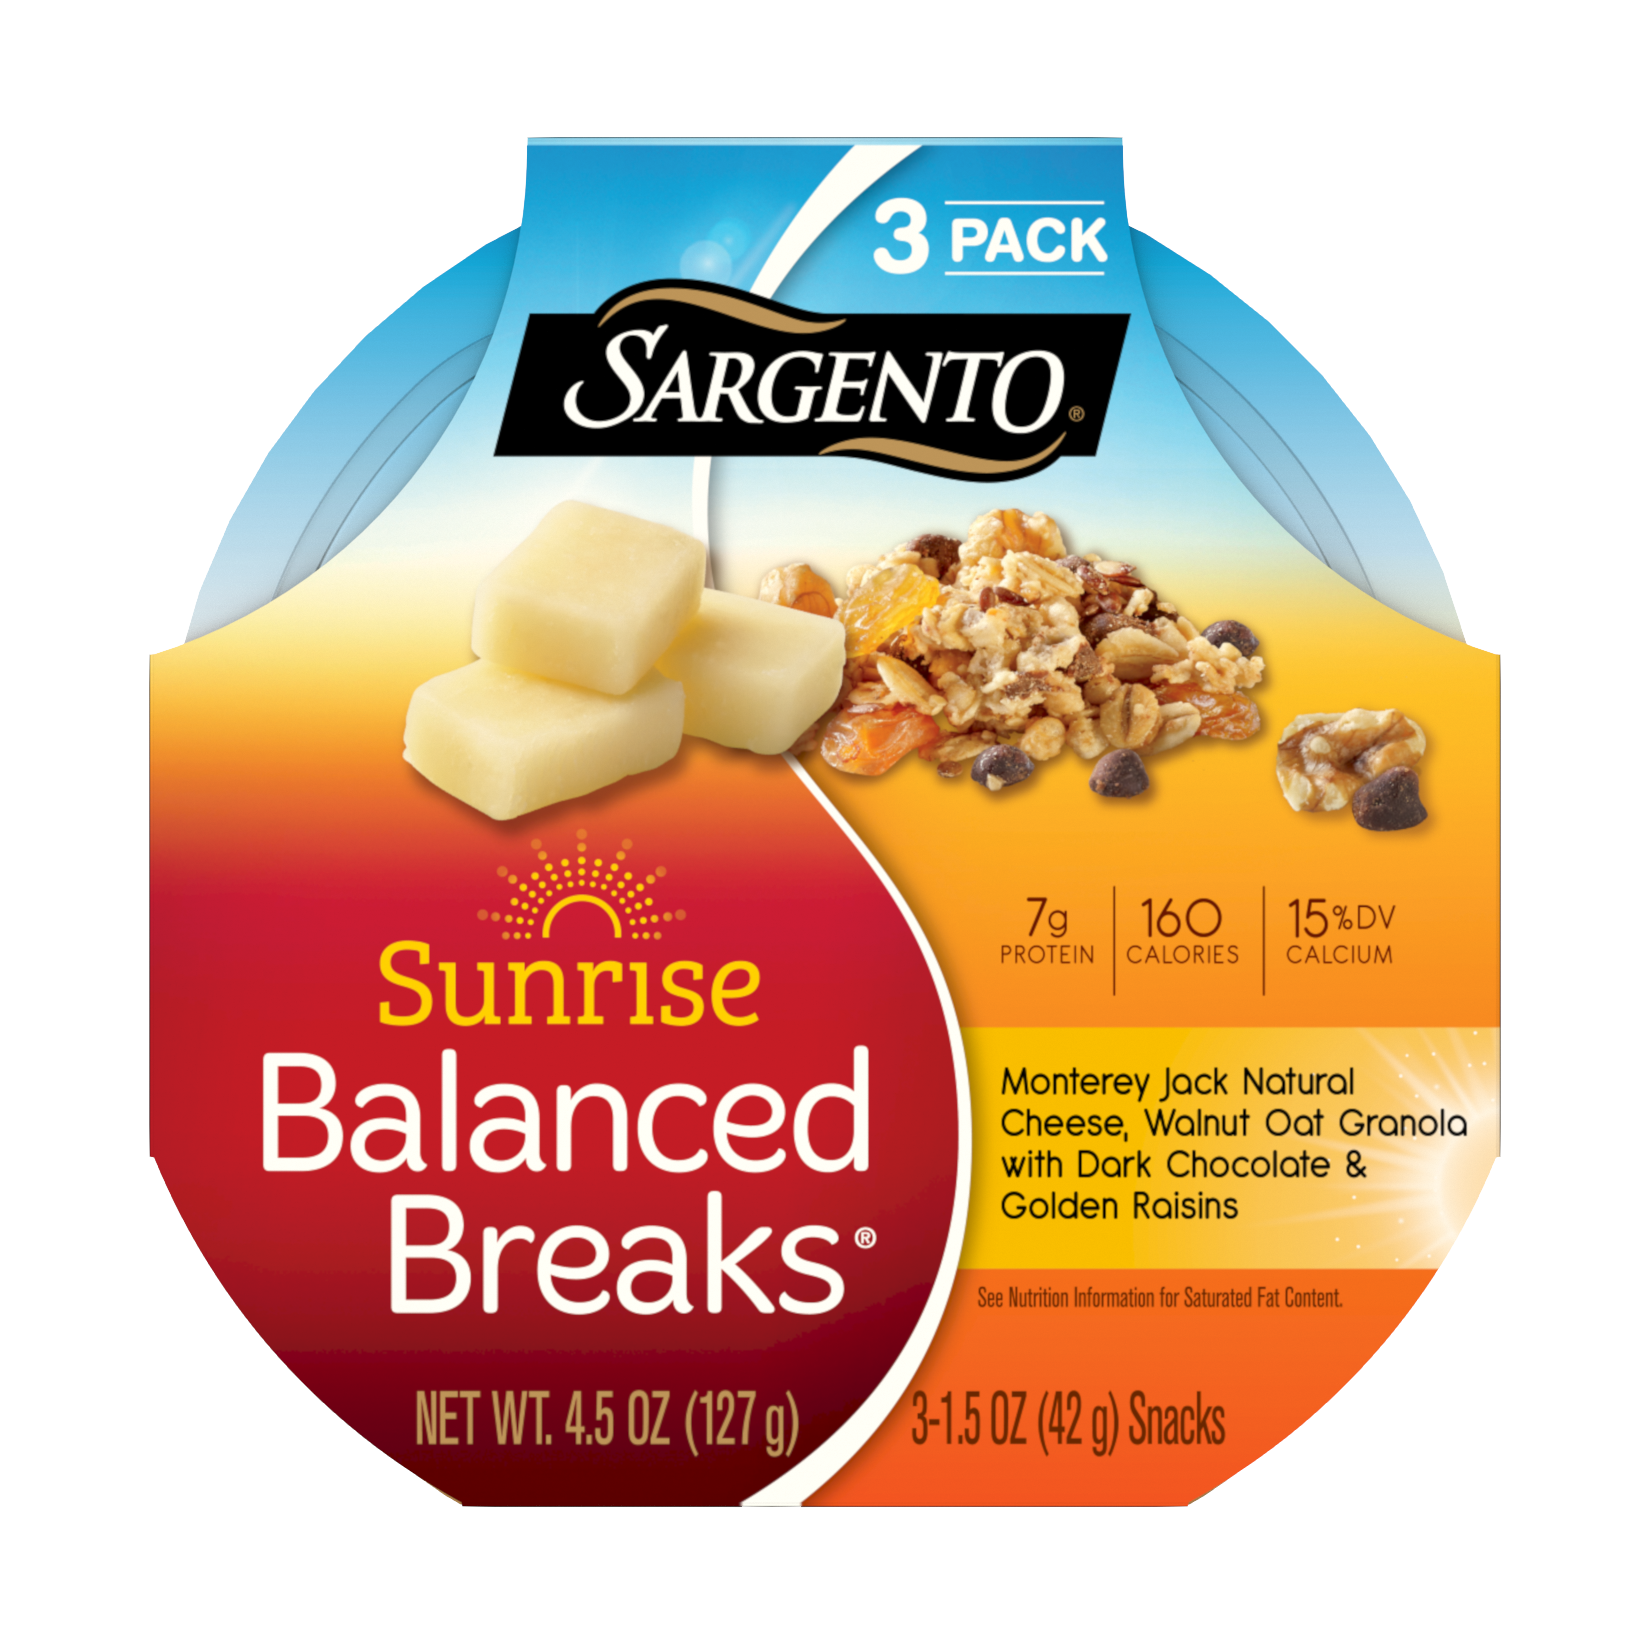 Sargento® Sunrise Balanced Breaks® Monterey Jack Natural Cheese, Walnut Oat Granola with Dark Chocolate, and Golden Raisins